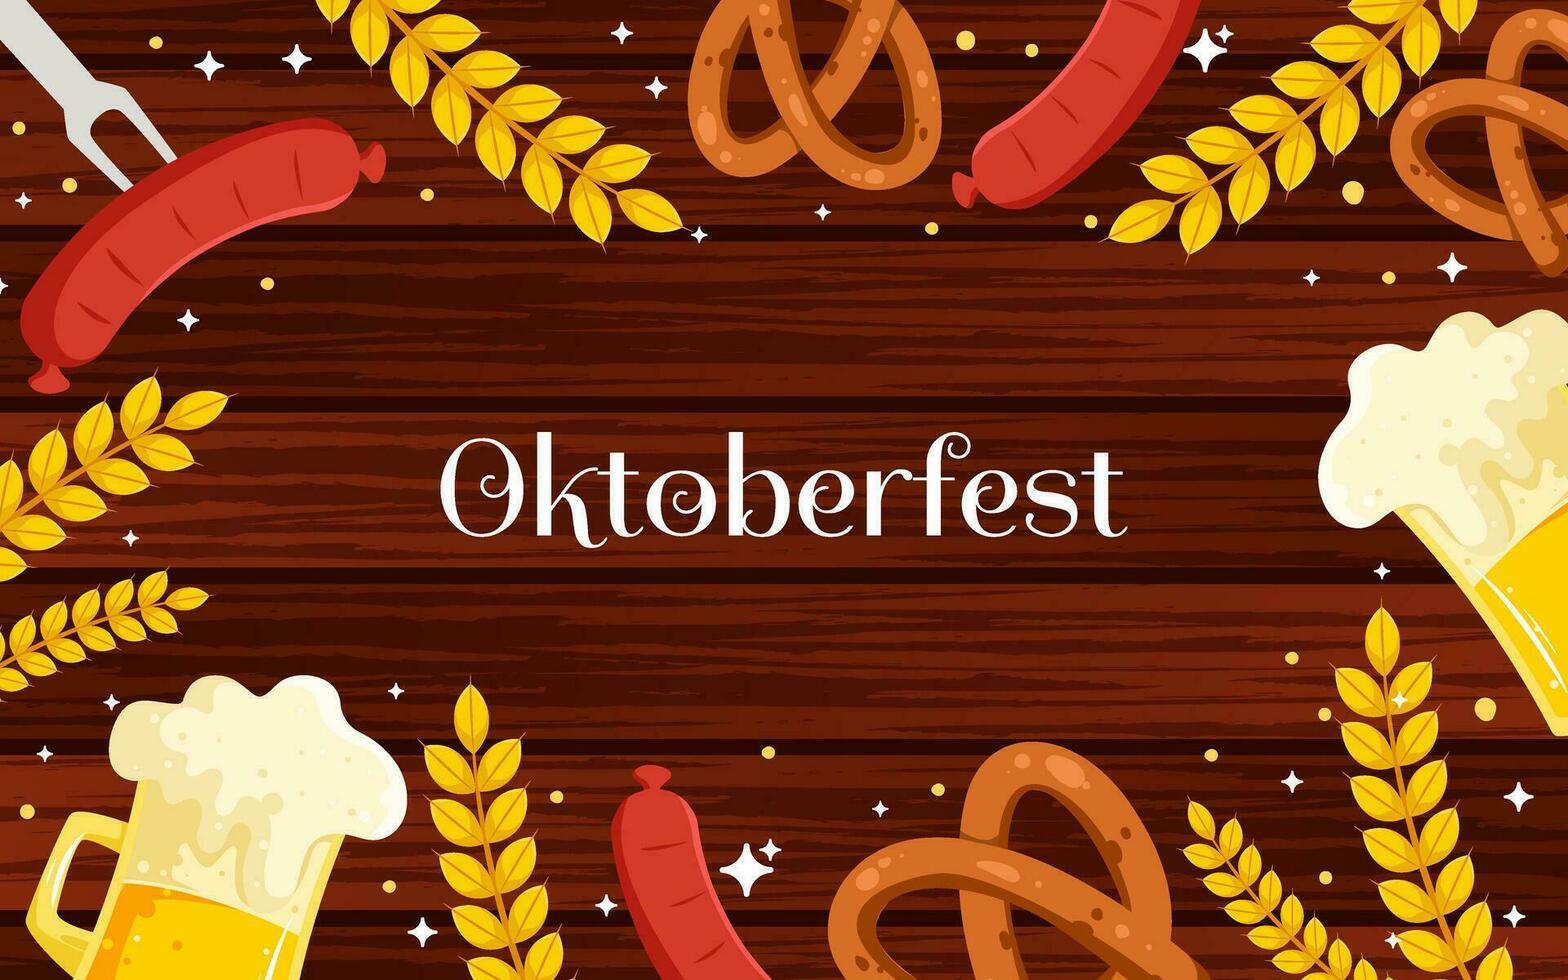 oktoberfeest festival element achtergrond vector